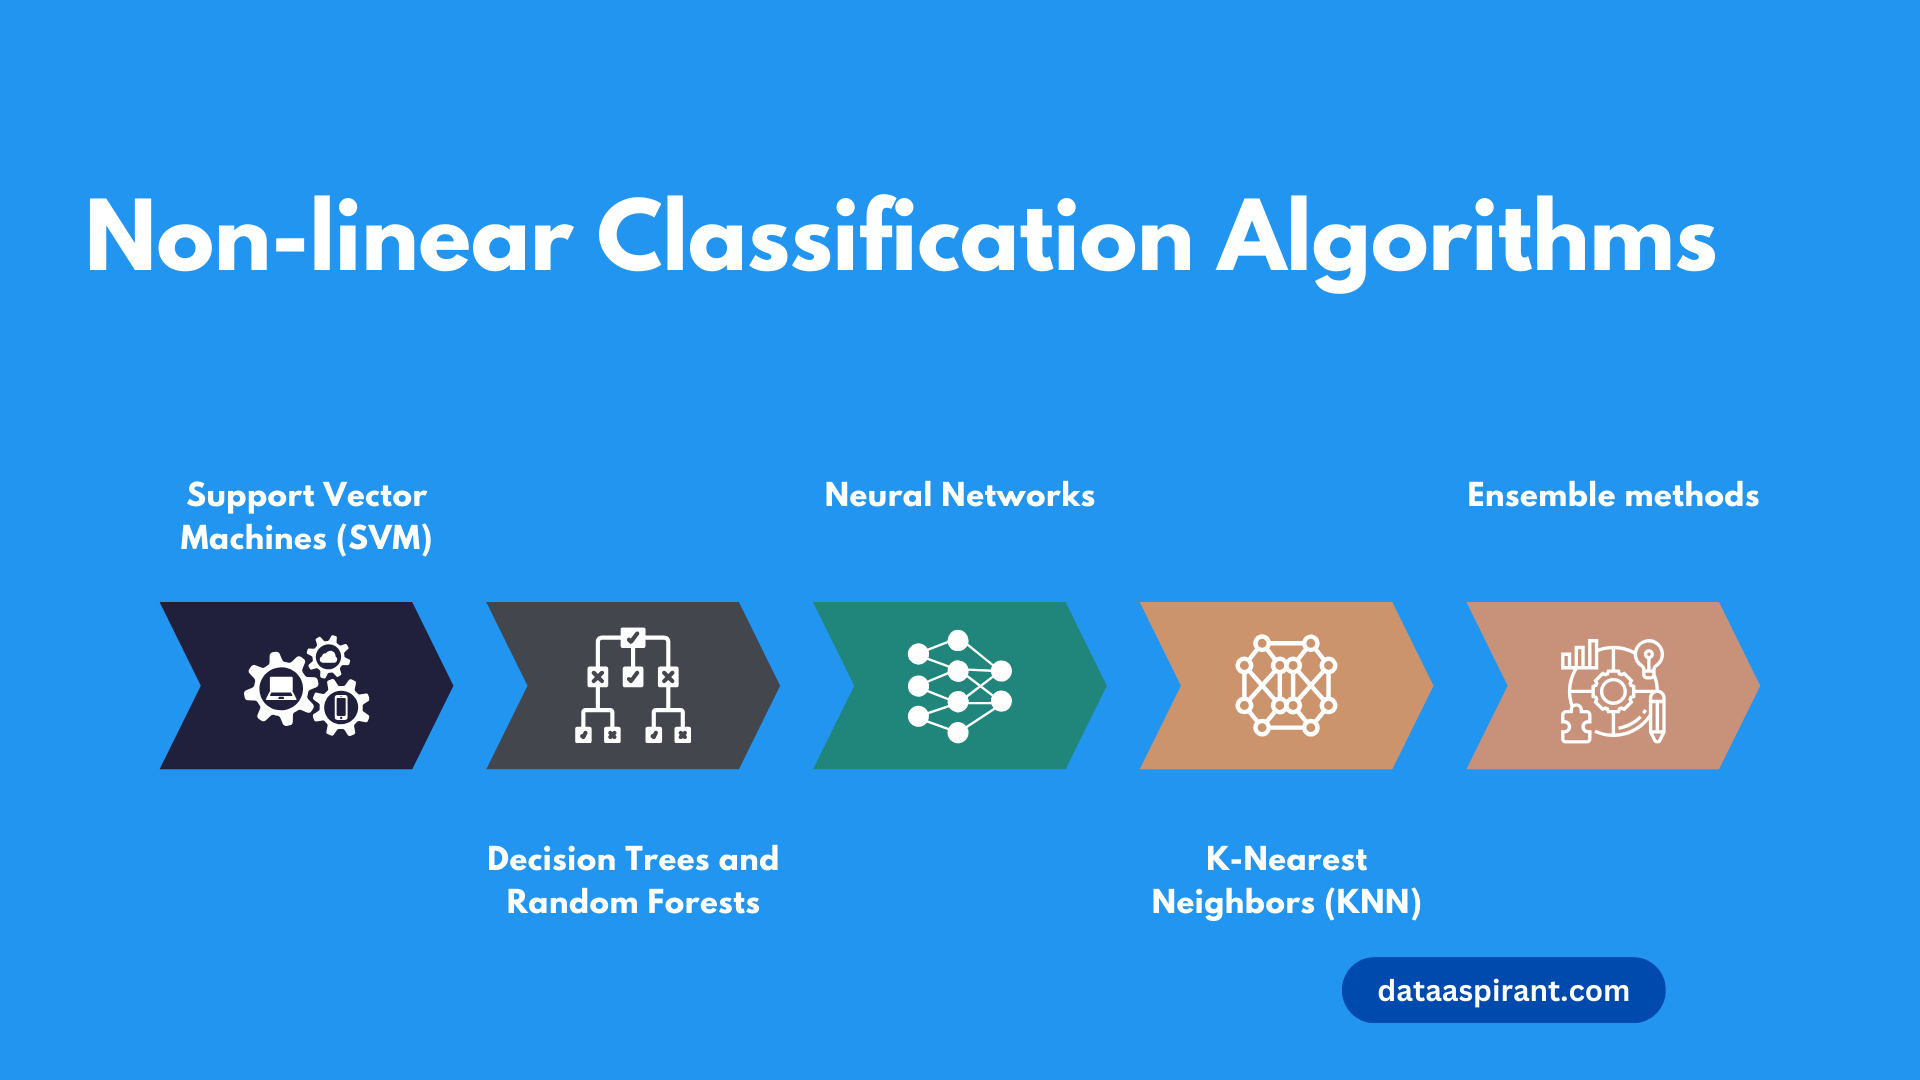 Popular Non-linear Classification Algorithms